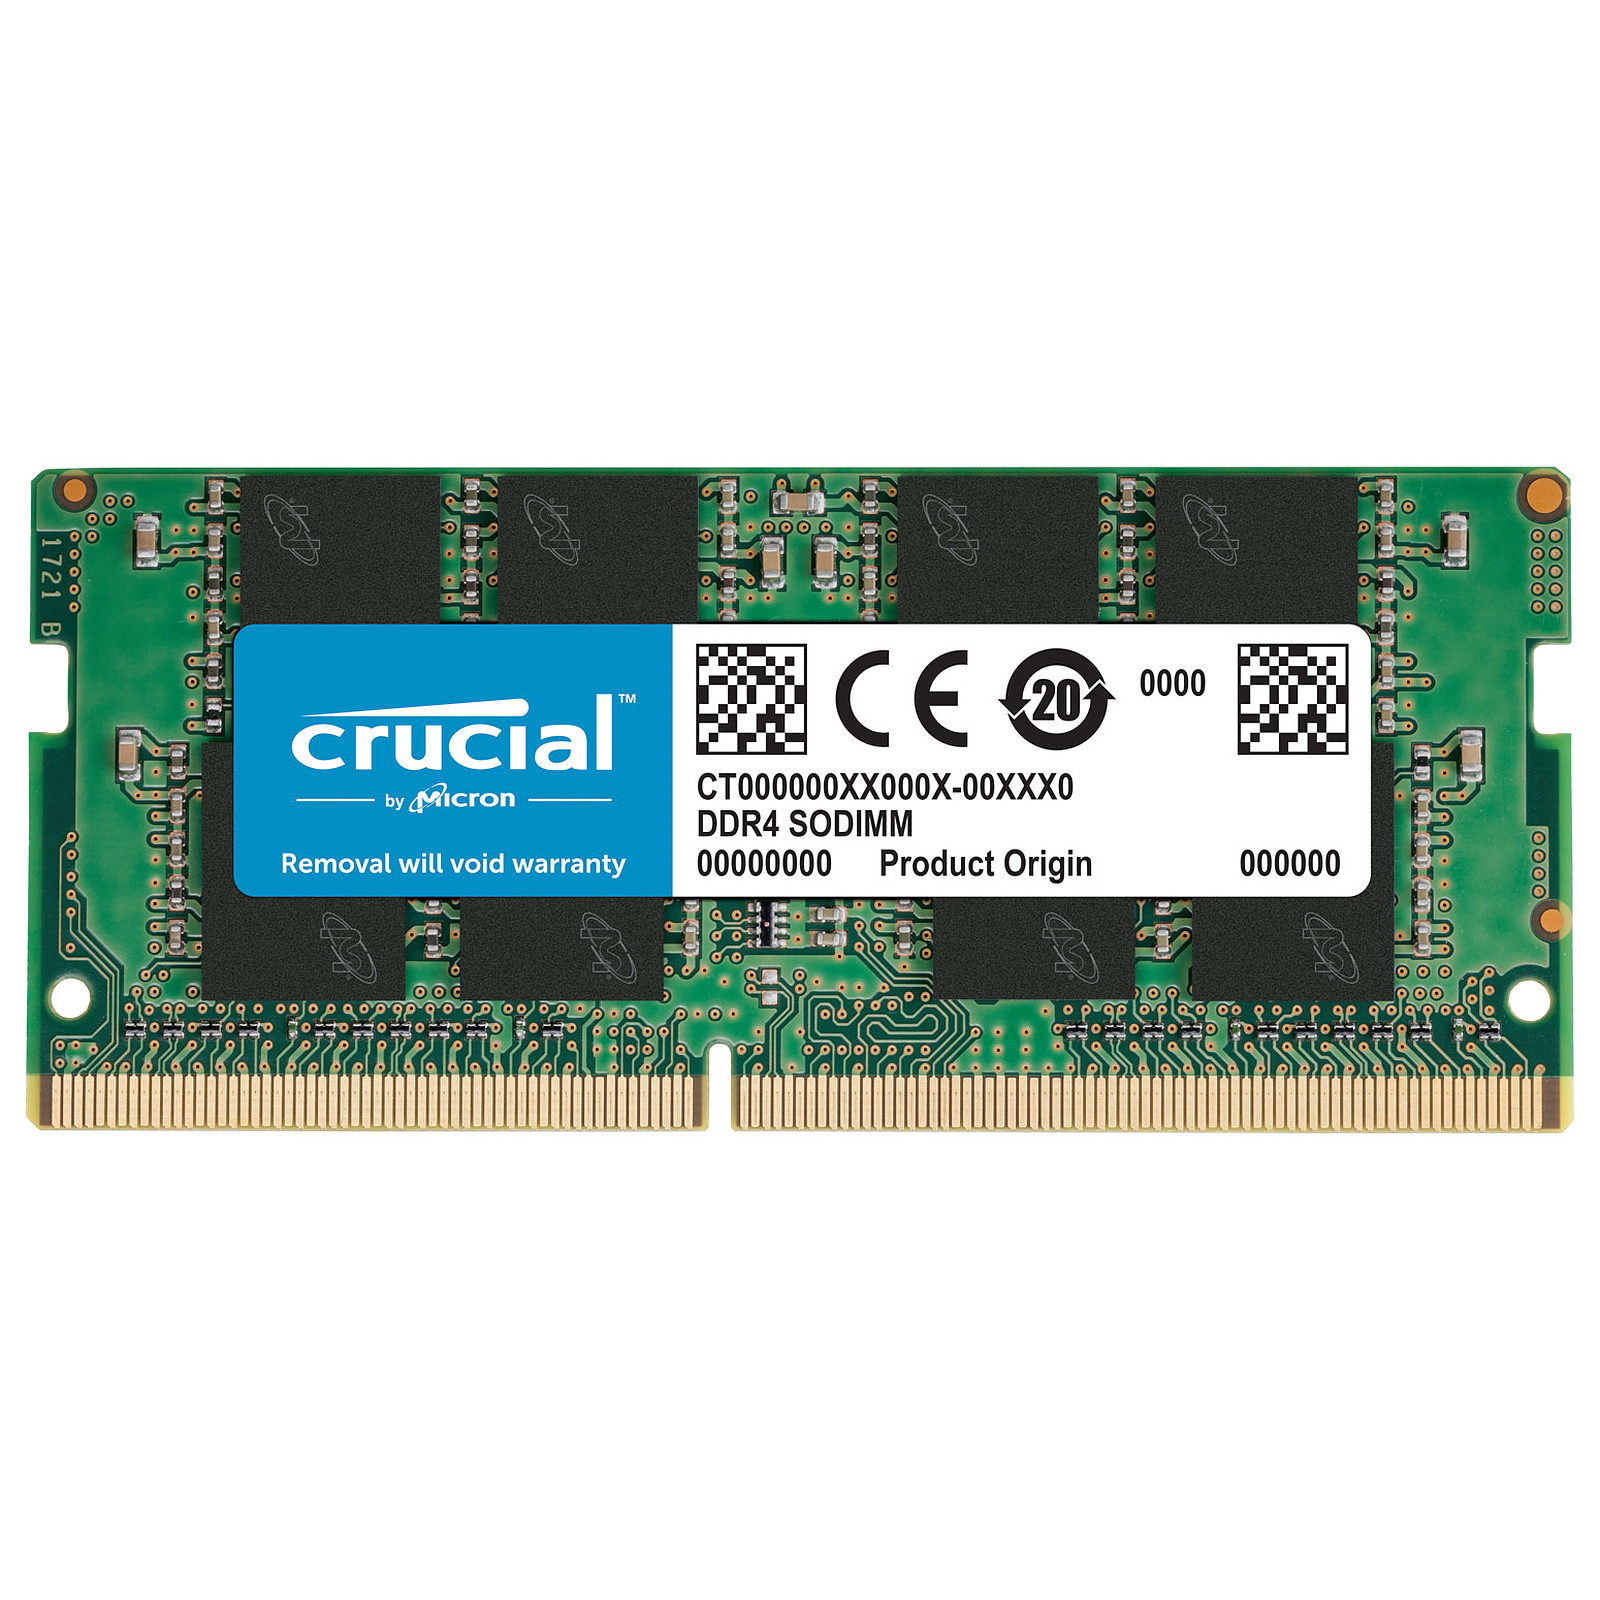 Mmoire So-Dimm Crucial DDR4 16Go PC21300 2666 MHz CL19, informatique Reunion 974, Futur Runion informatique